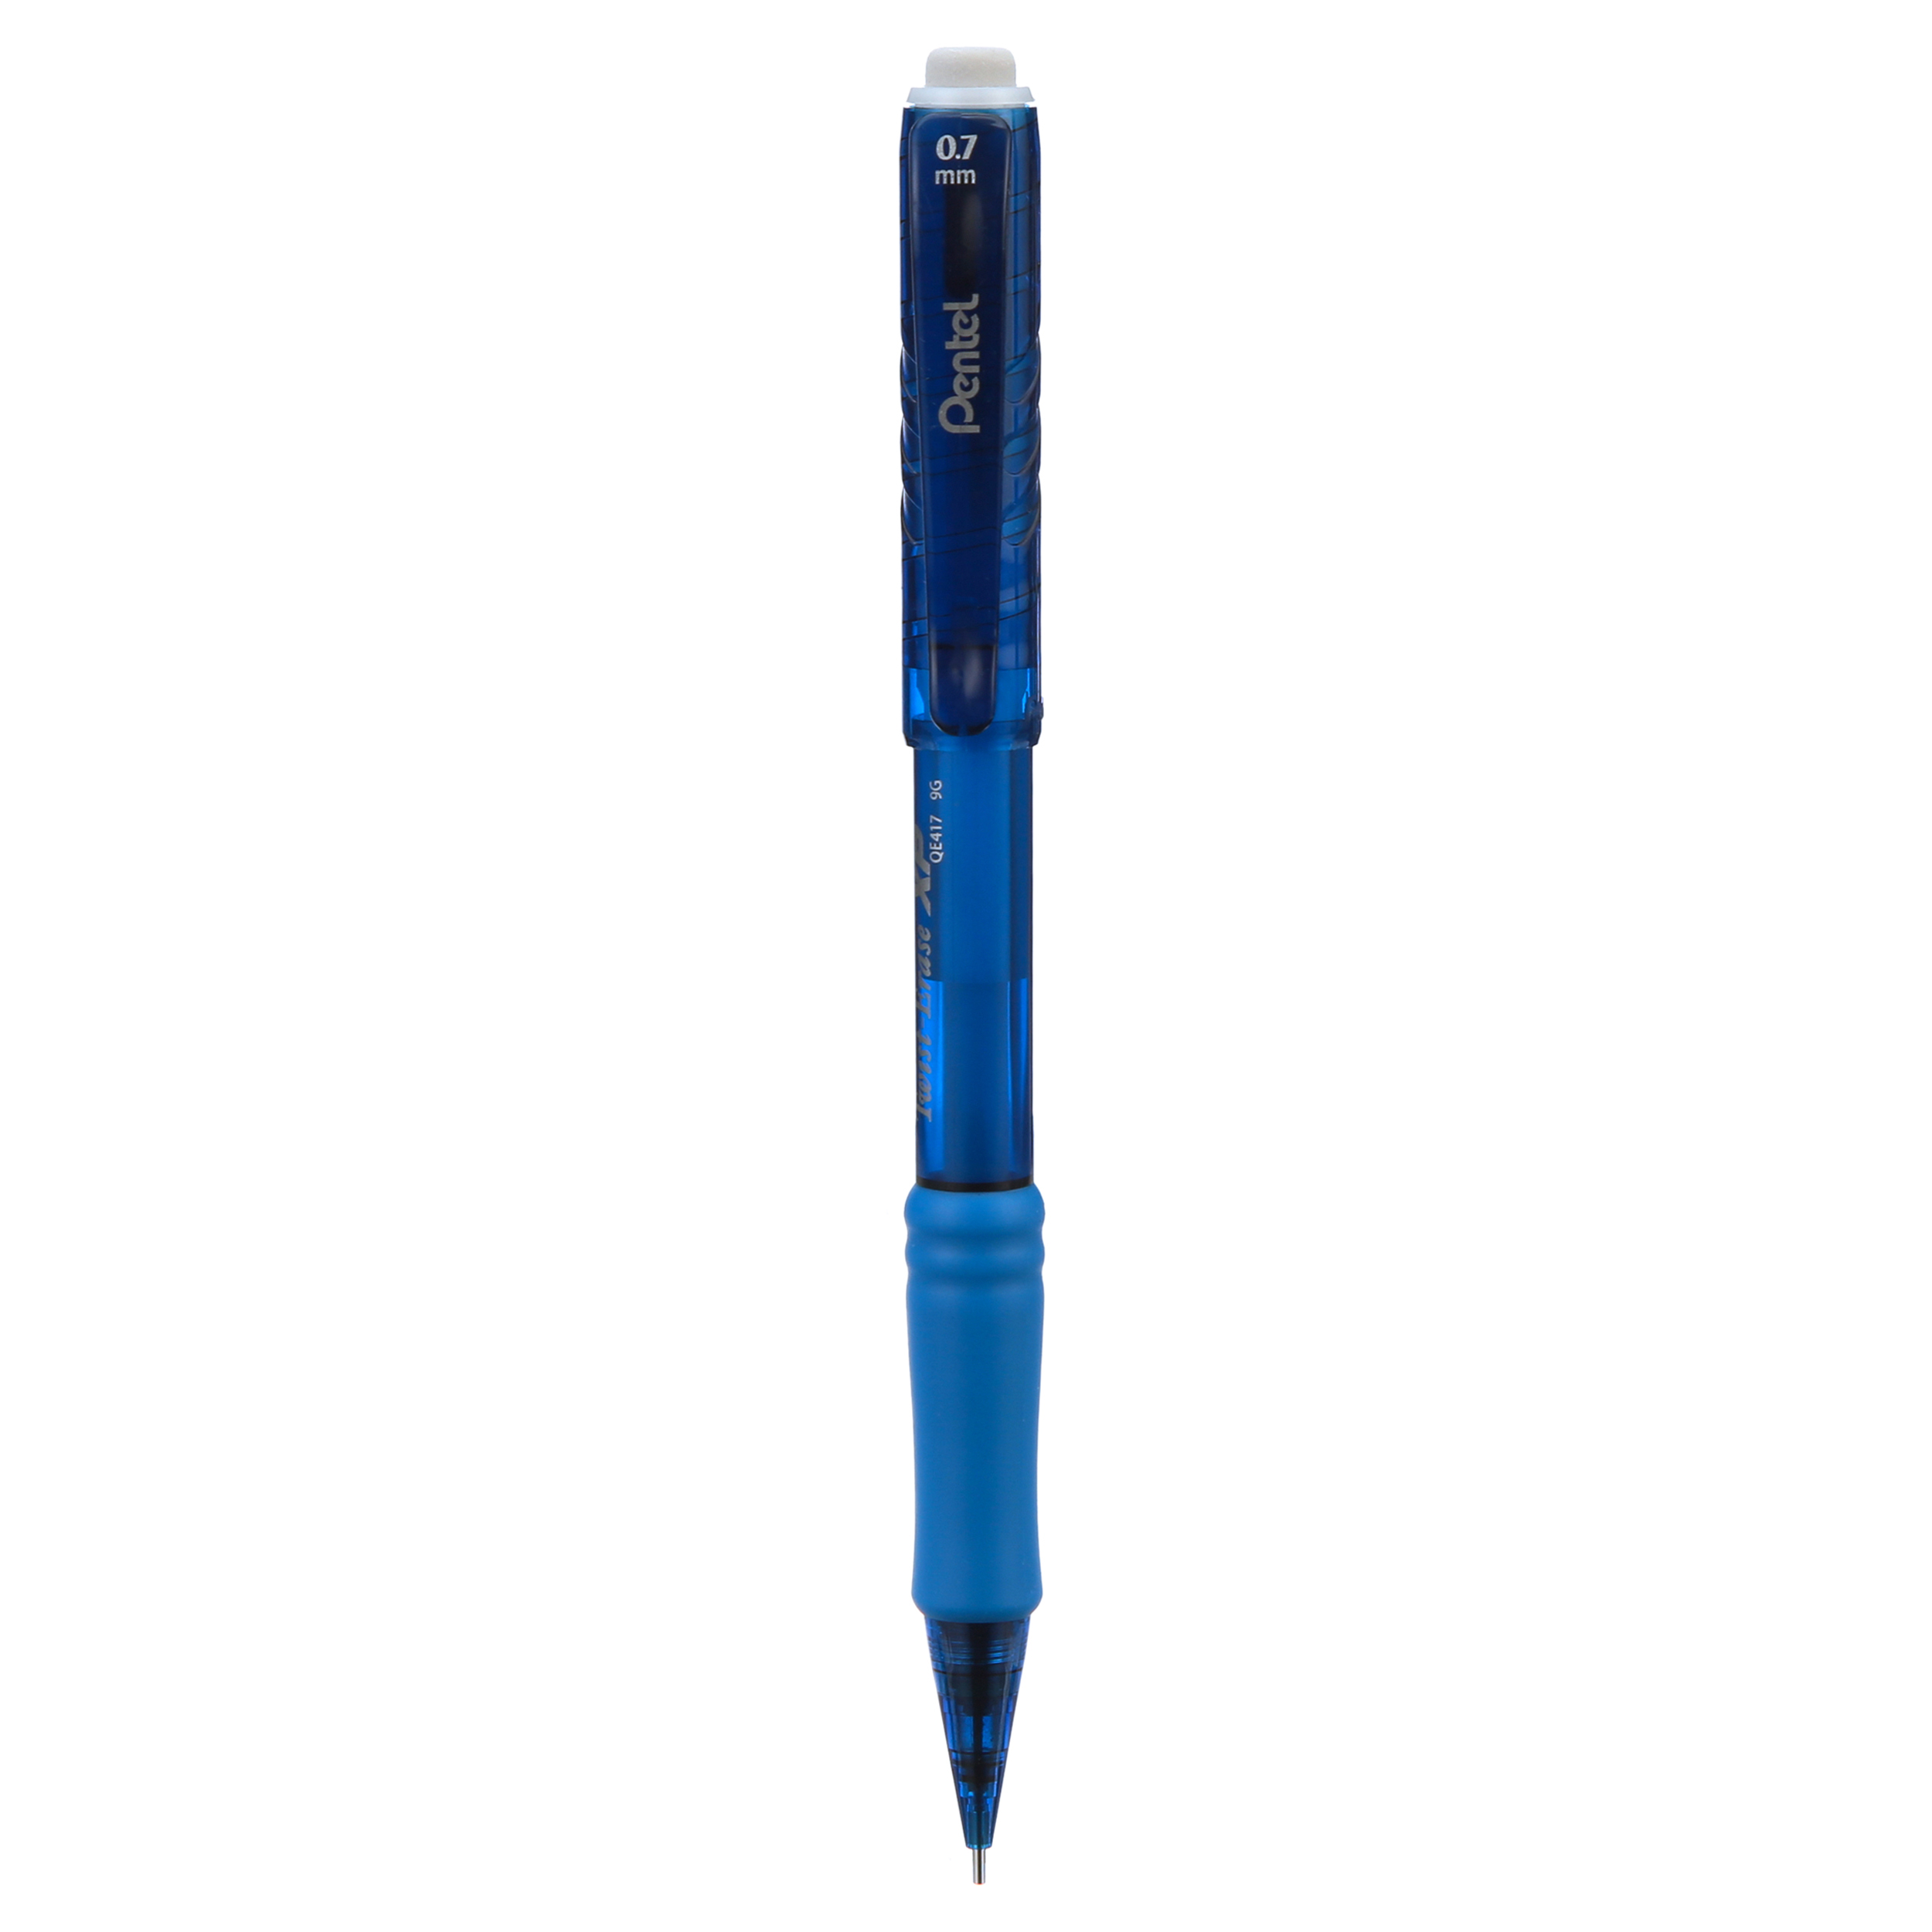 Pentel Twist-Erase EXPRESS Pencil (0.7mm) Asstd Barrel Colors, 5-Pk - image 4 of 6